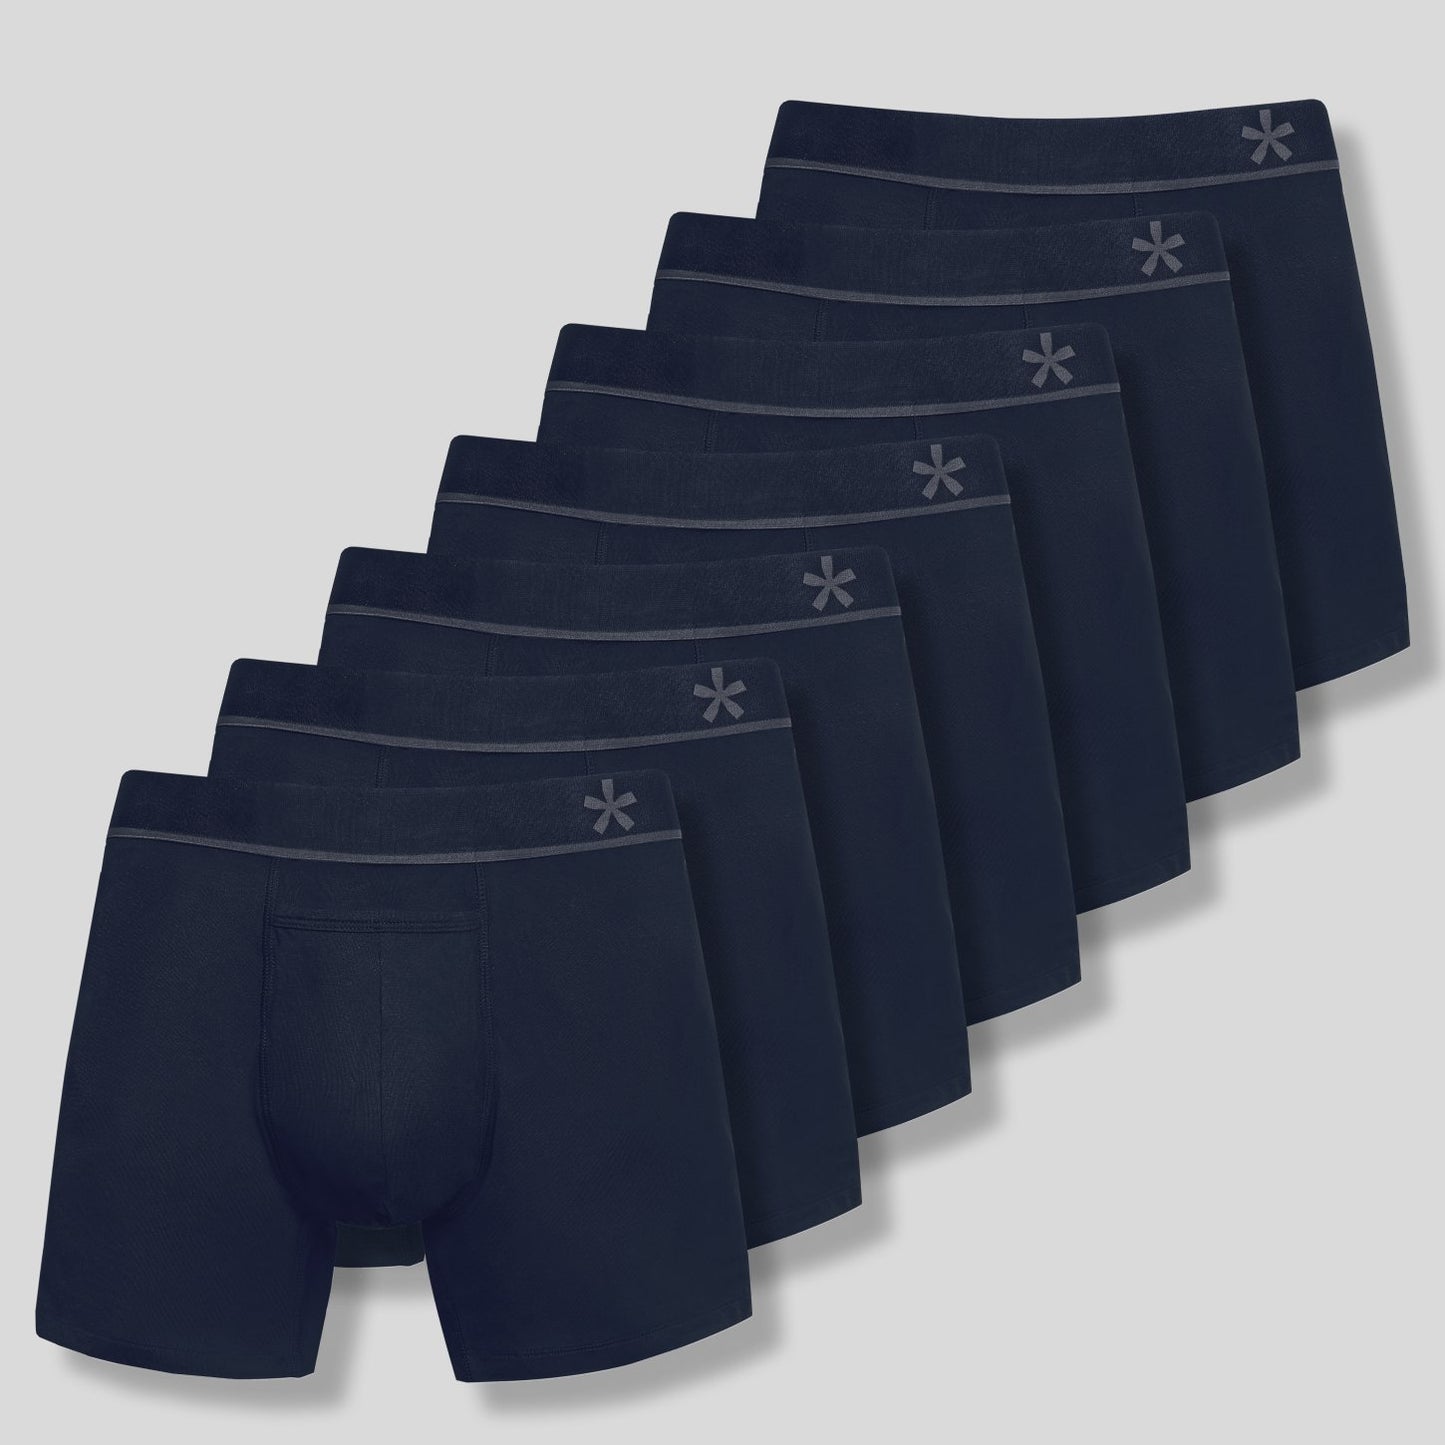 5 Pack A-dam Adam Mens Organic Cotton Sensitive Skin Trunks Underwear S-2XL